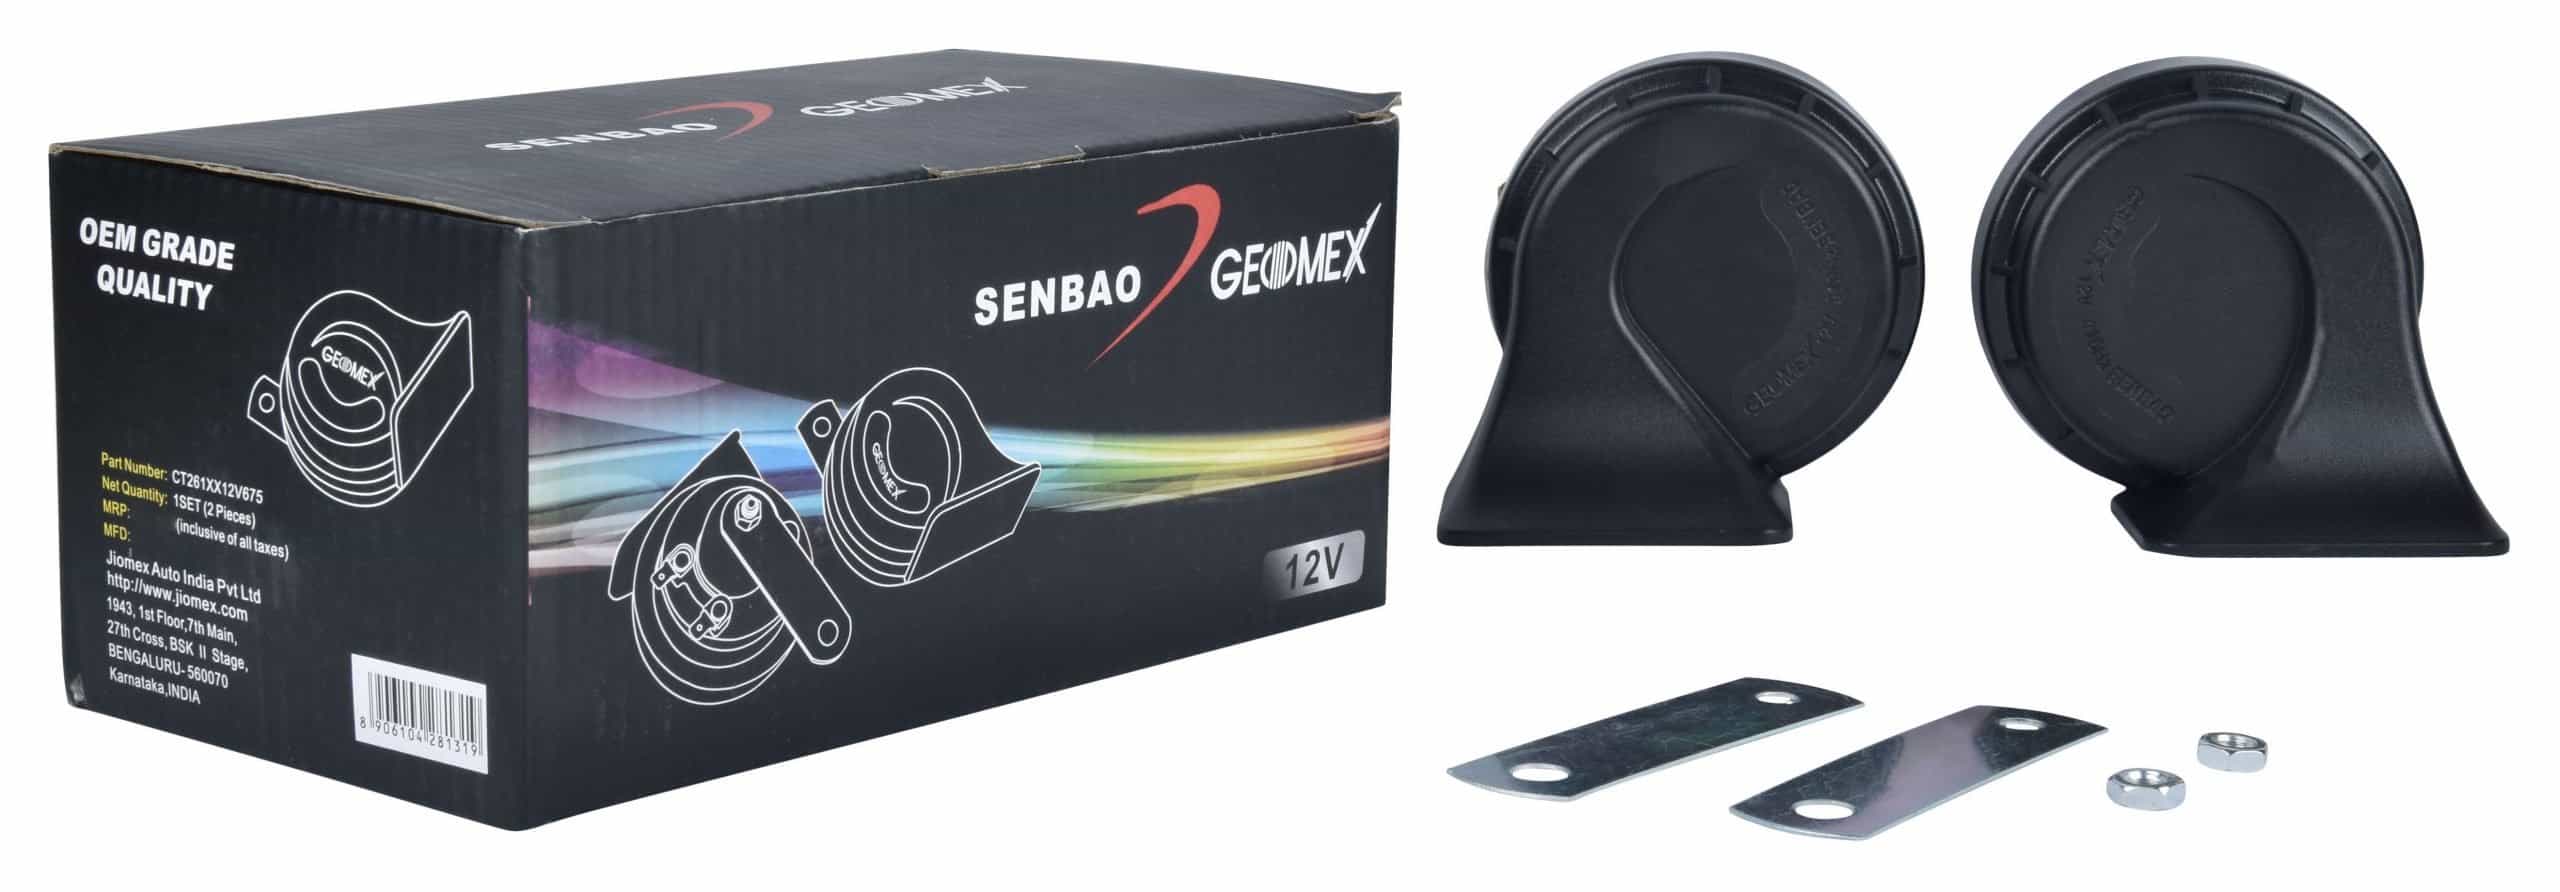 Senbao Geomex Windtone Horn New Model Type 12V (Set of 2)